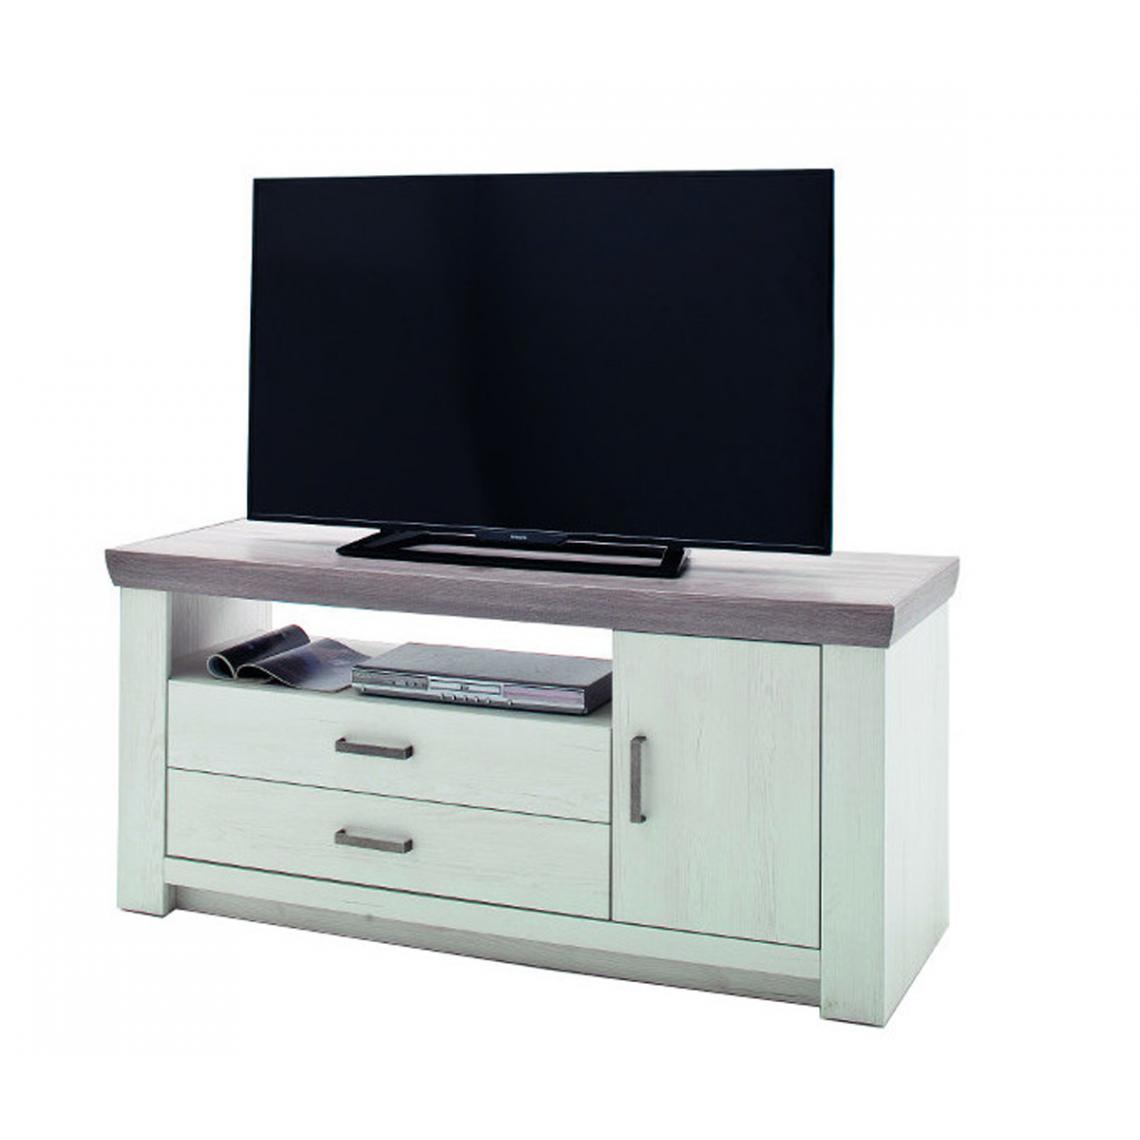 Pegane - Meuble TV en pin blanc et chêne Neslon - L.180 x H.66 x P.56 cm - Meubles TV, Hi-Fi